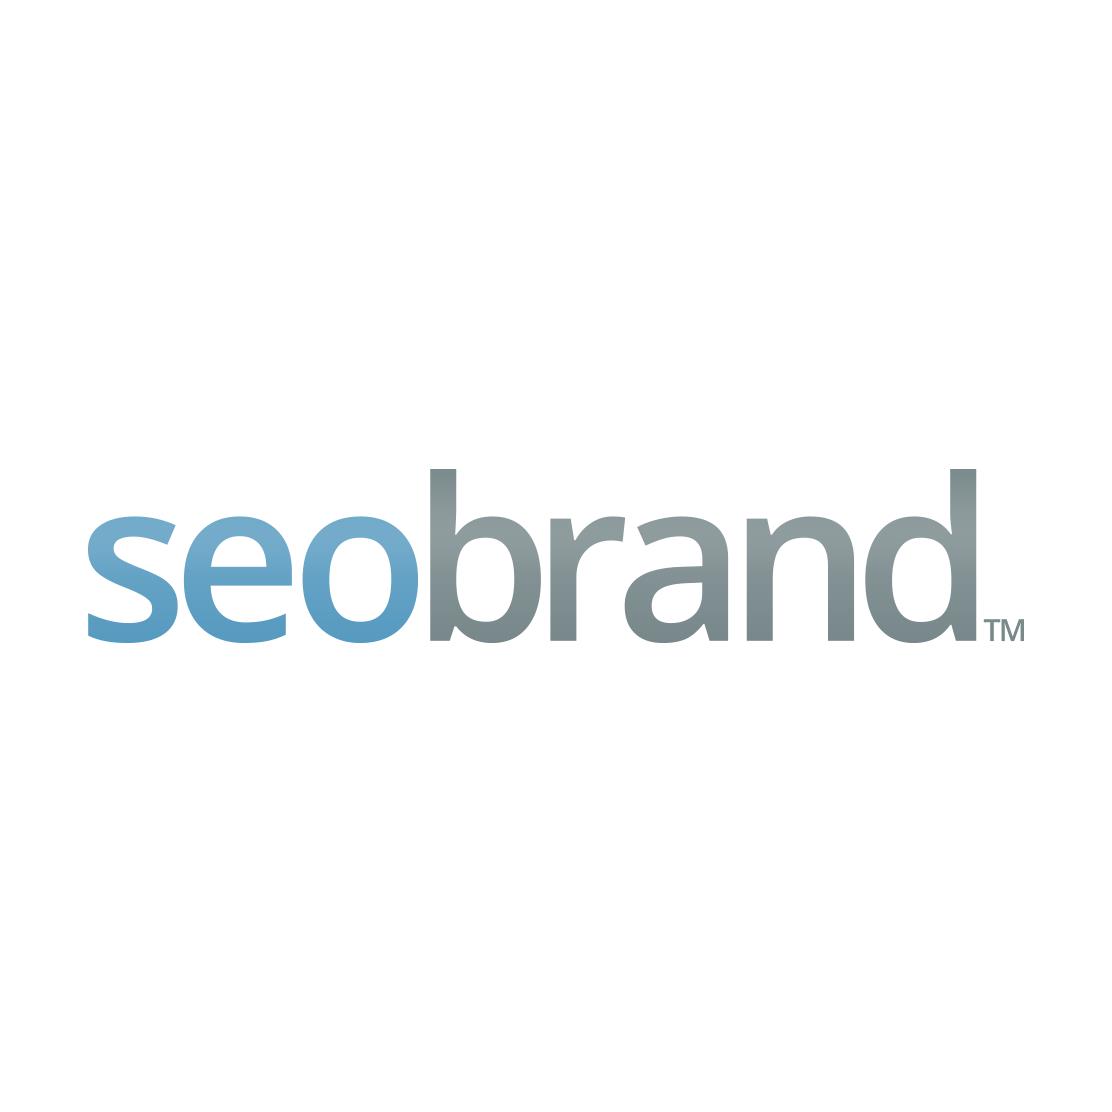 Top ORM Company Logo: SEO Brand